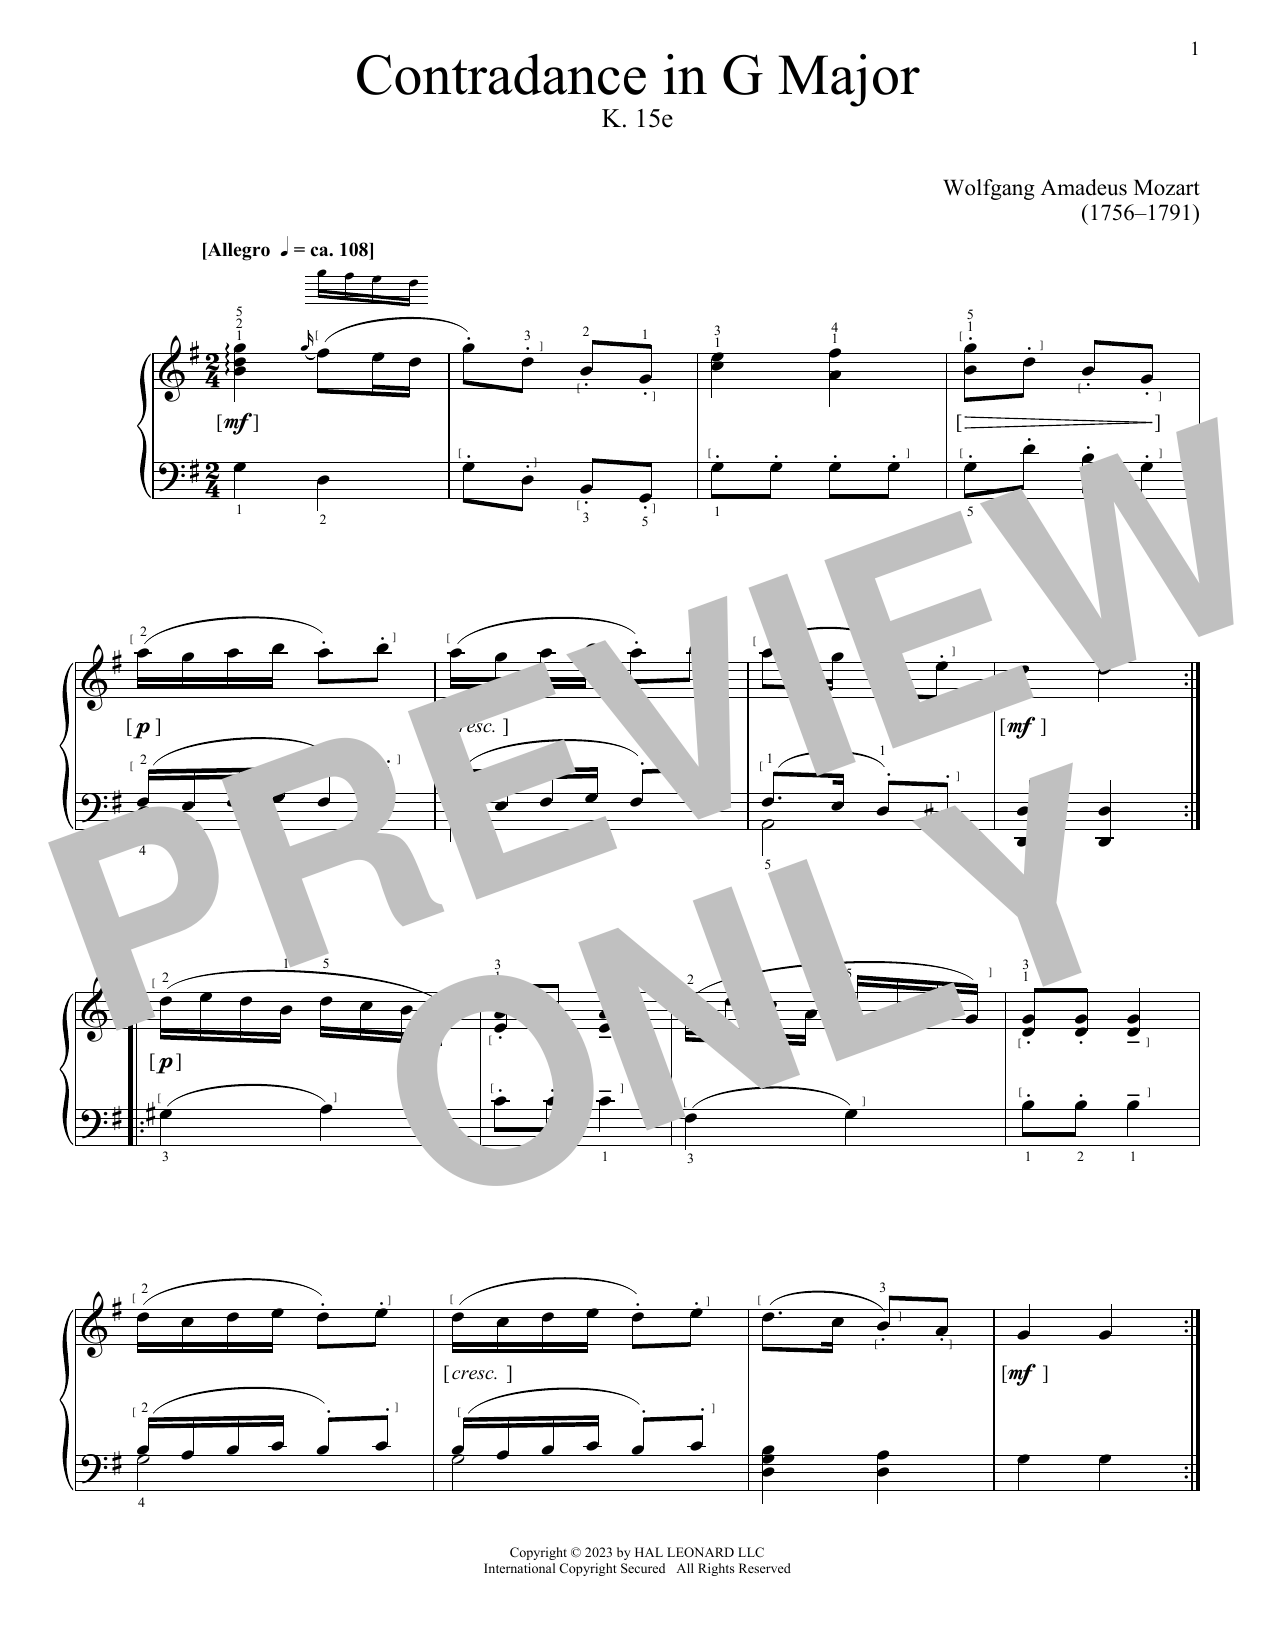 Download Wolfgang Amadeus Mozart Contradance In G Major, K. 15e Sheet Music